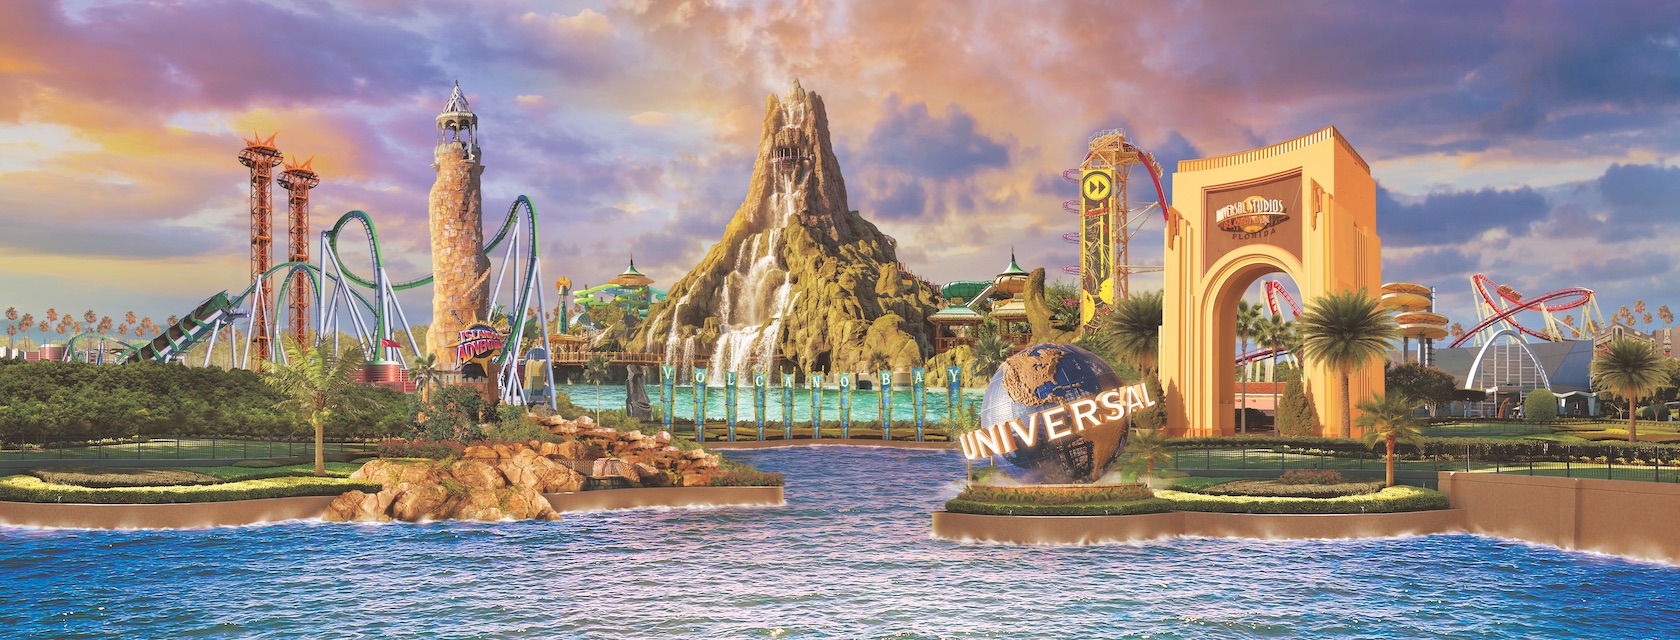 Universal Studios Islands of Adventure (Orlando, Florida, United States)